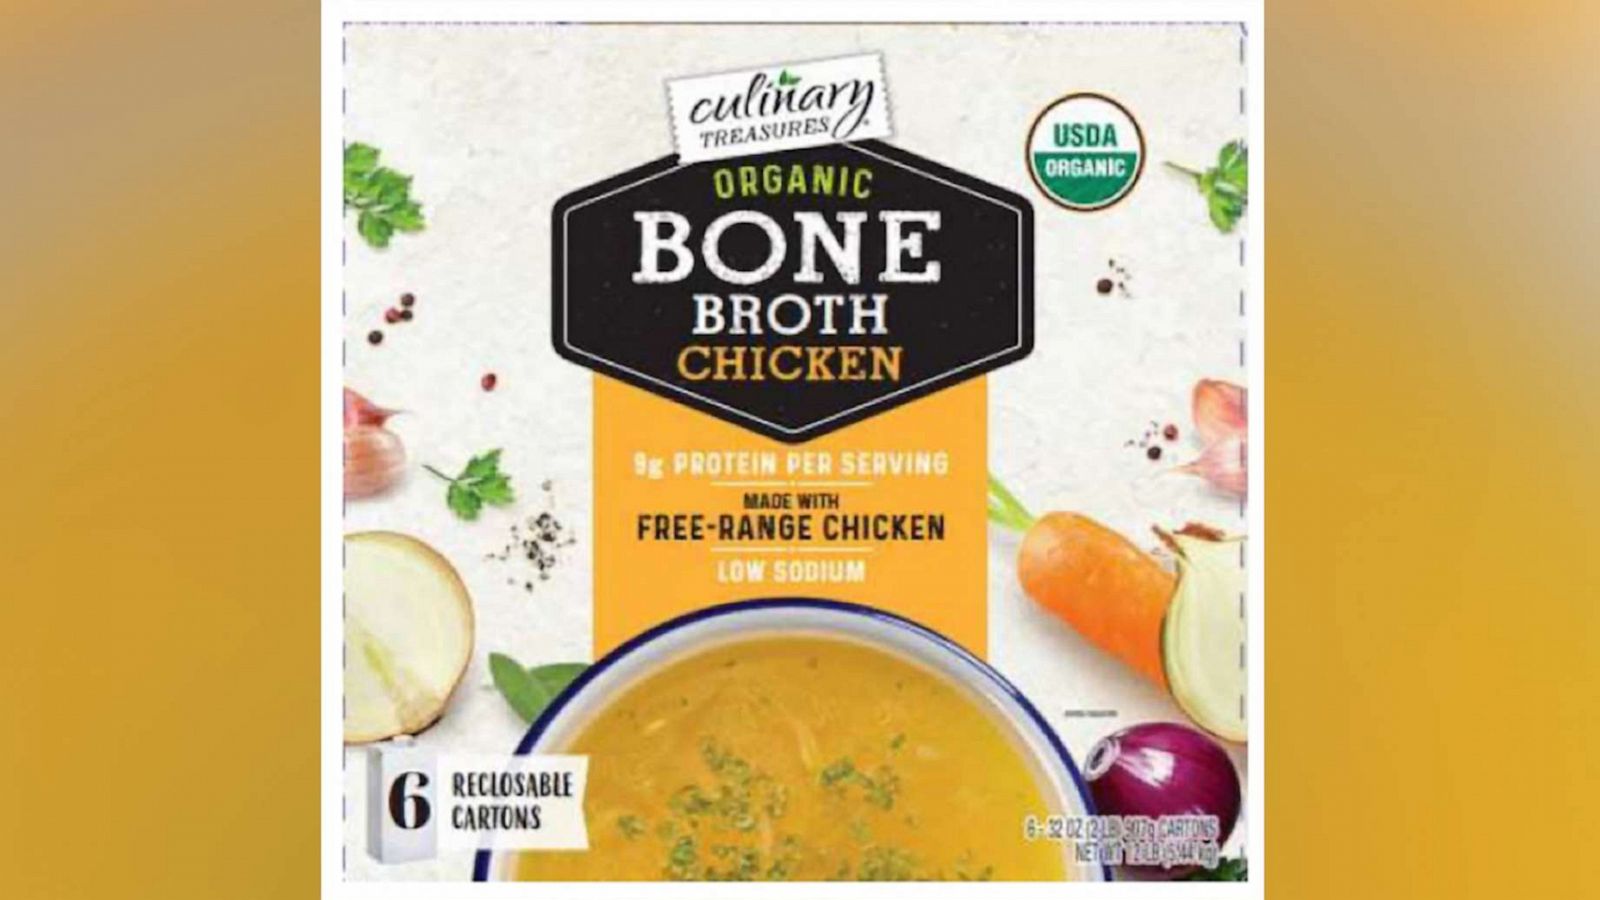 Organic Chicken Broth - No Salt Added, 6-pack